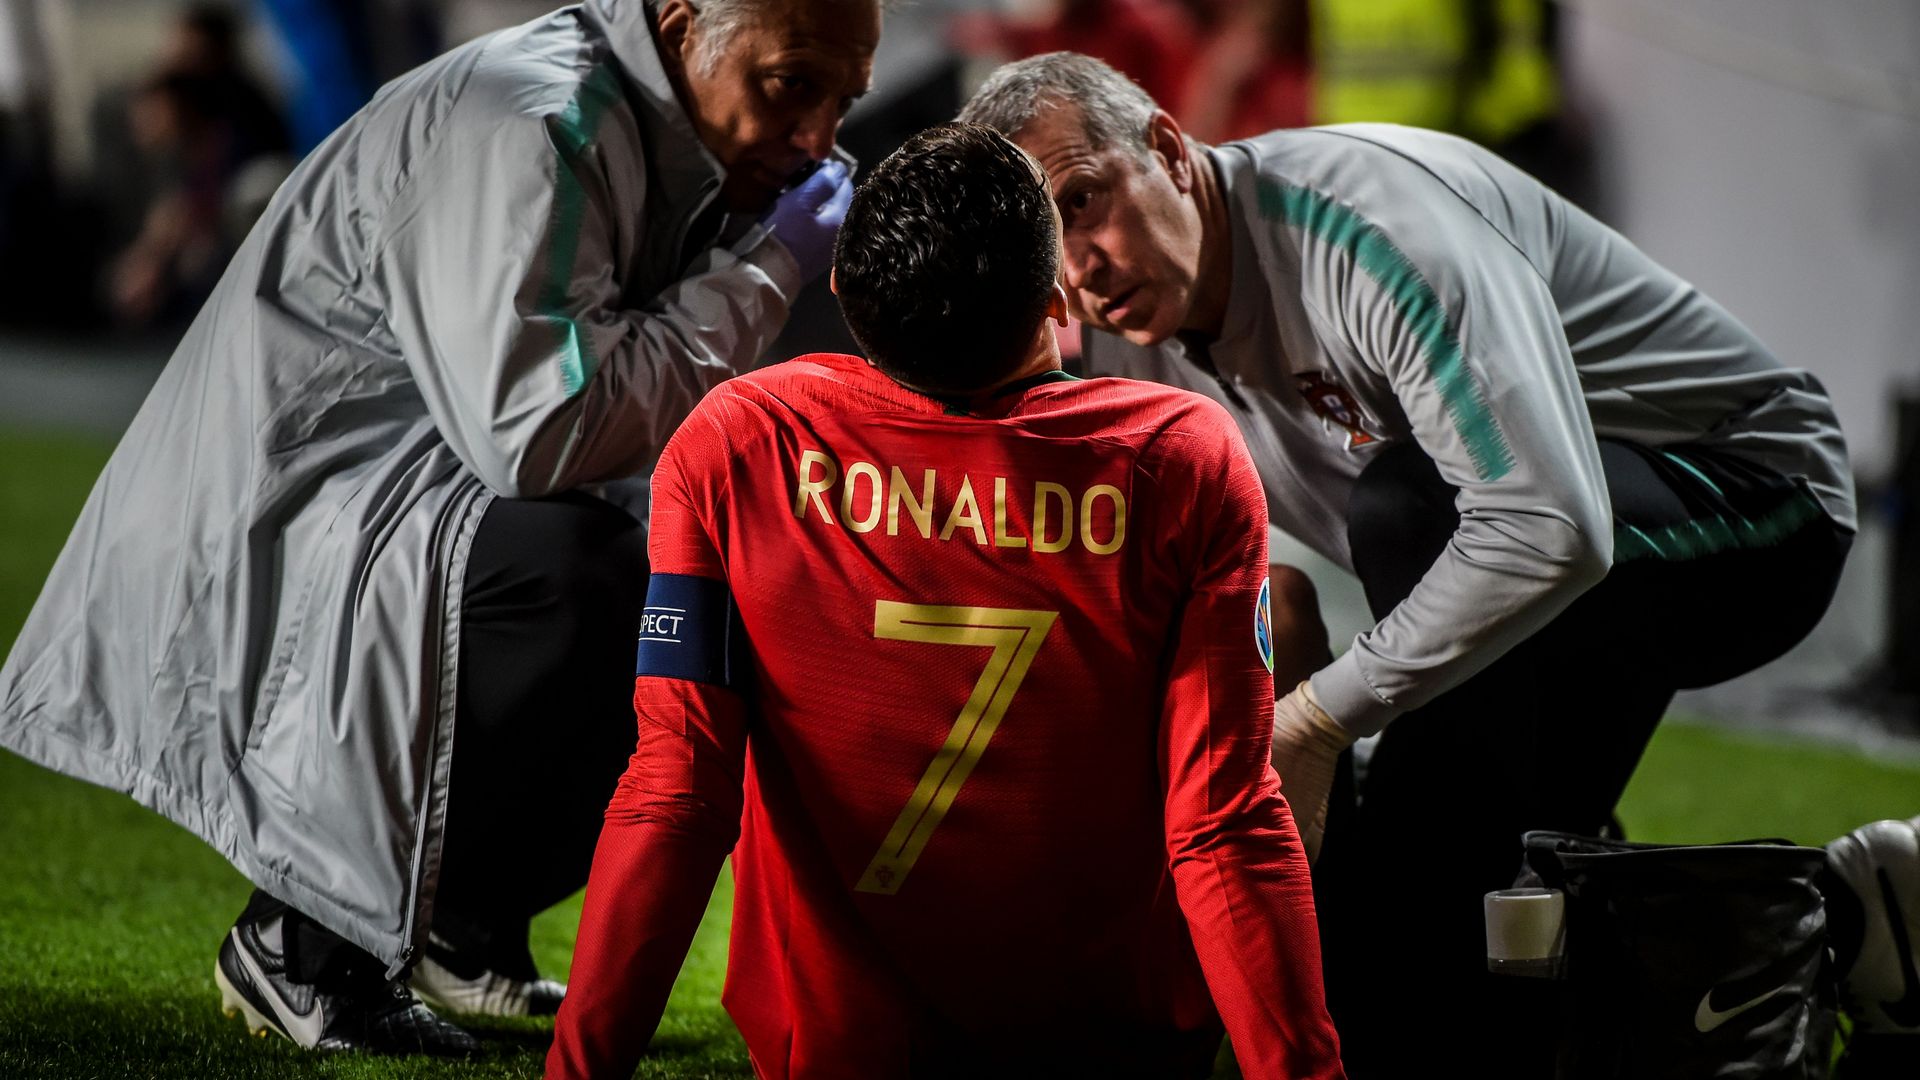 Portugal's forward Cristiano Ronaldo injured during the Euro 2020 qualifying